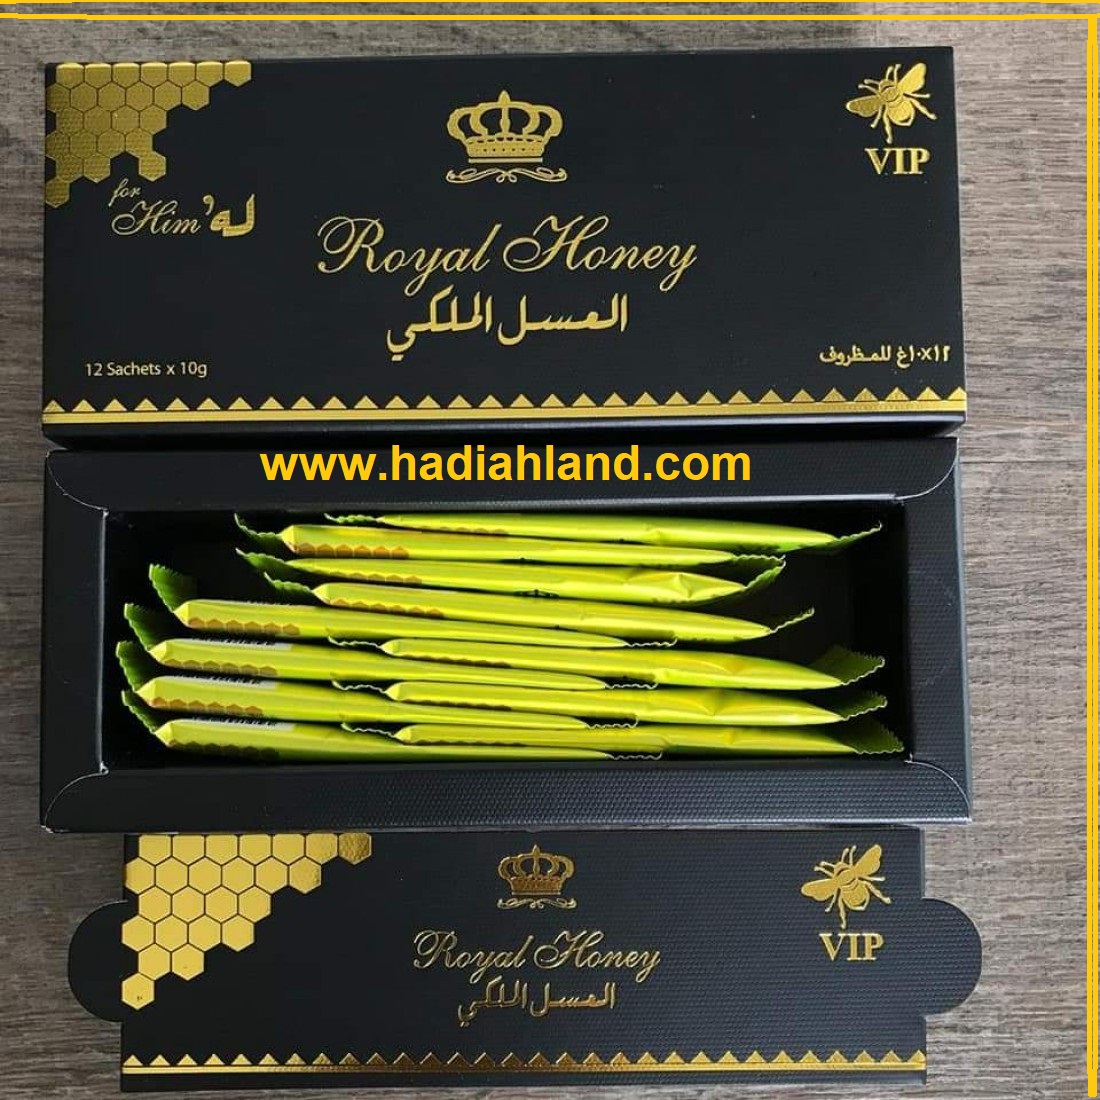 Crown Royal Honey Vip 10g | royal honey vip price wholesale | royal